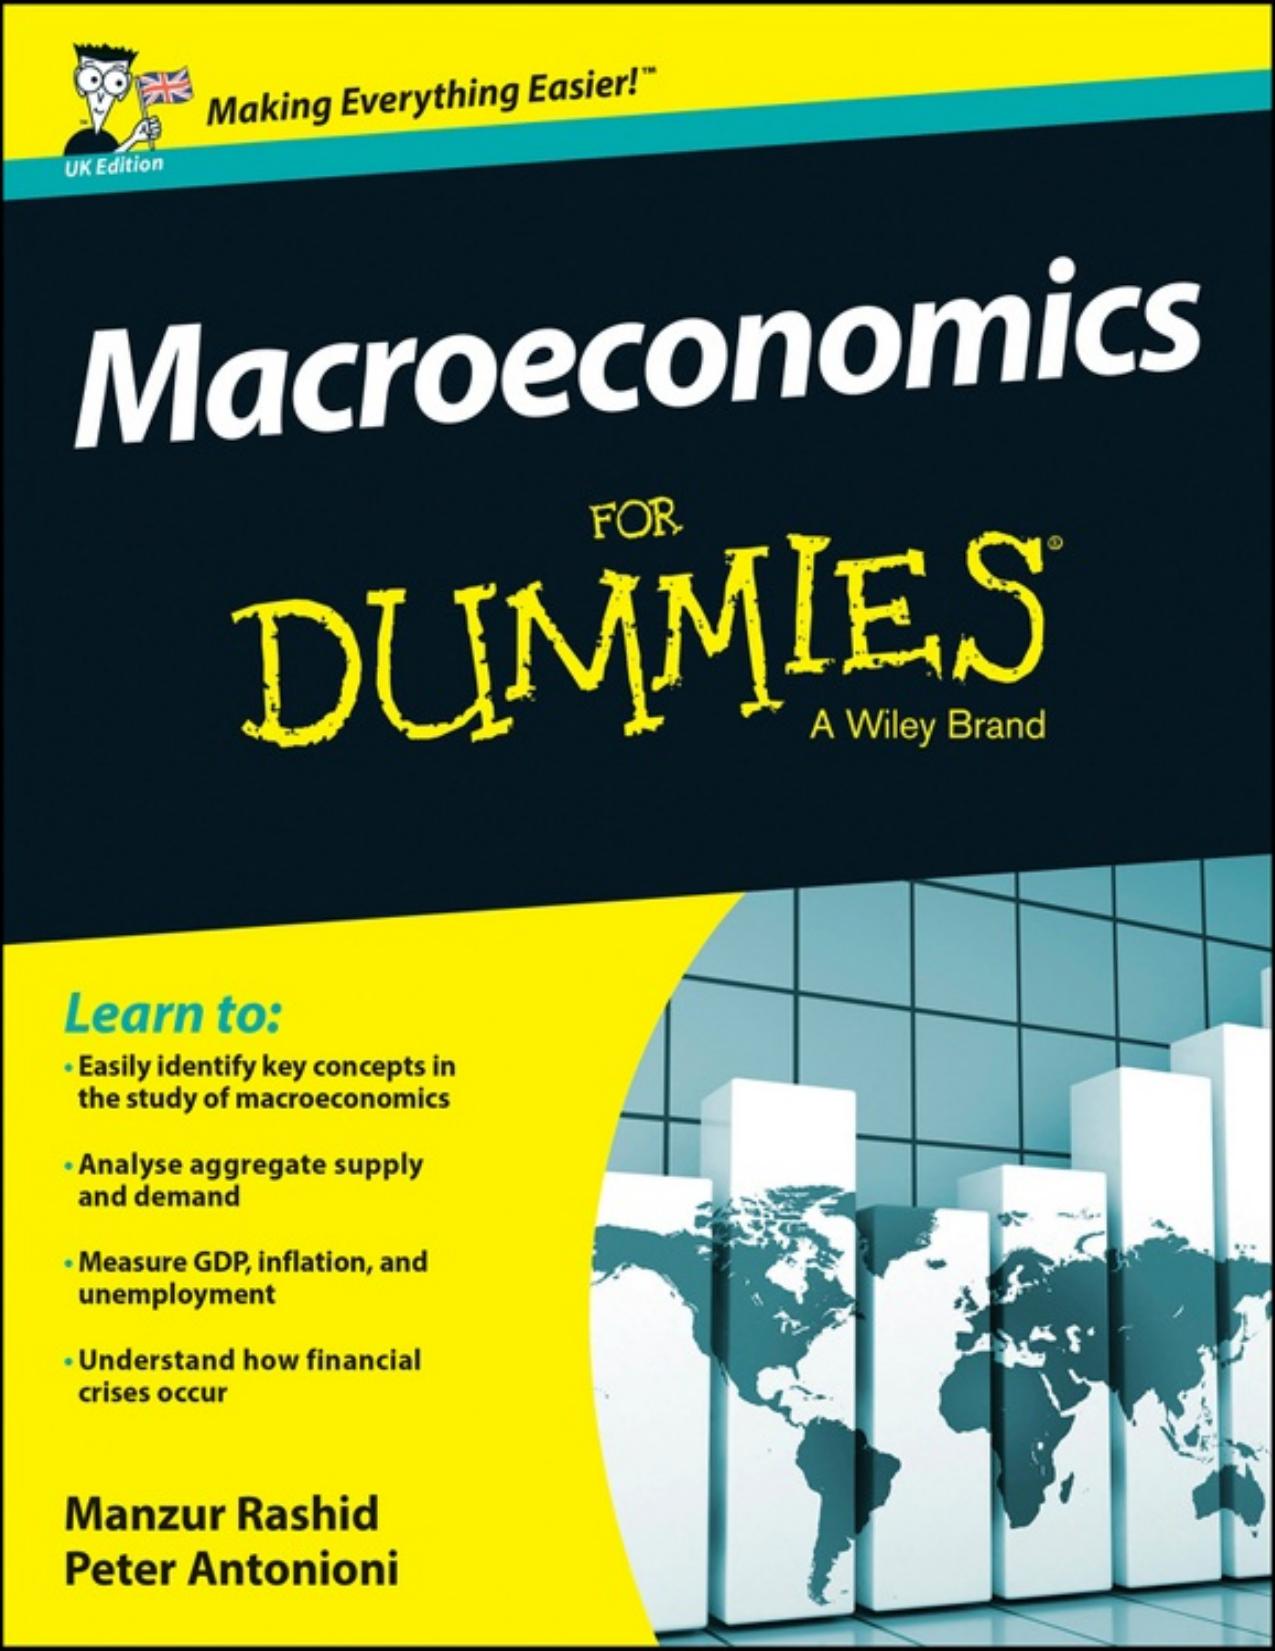 Macroeconomics For Dummies - UK Edition - PDFDrive.com